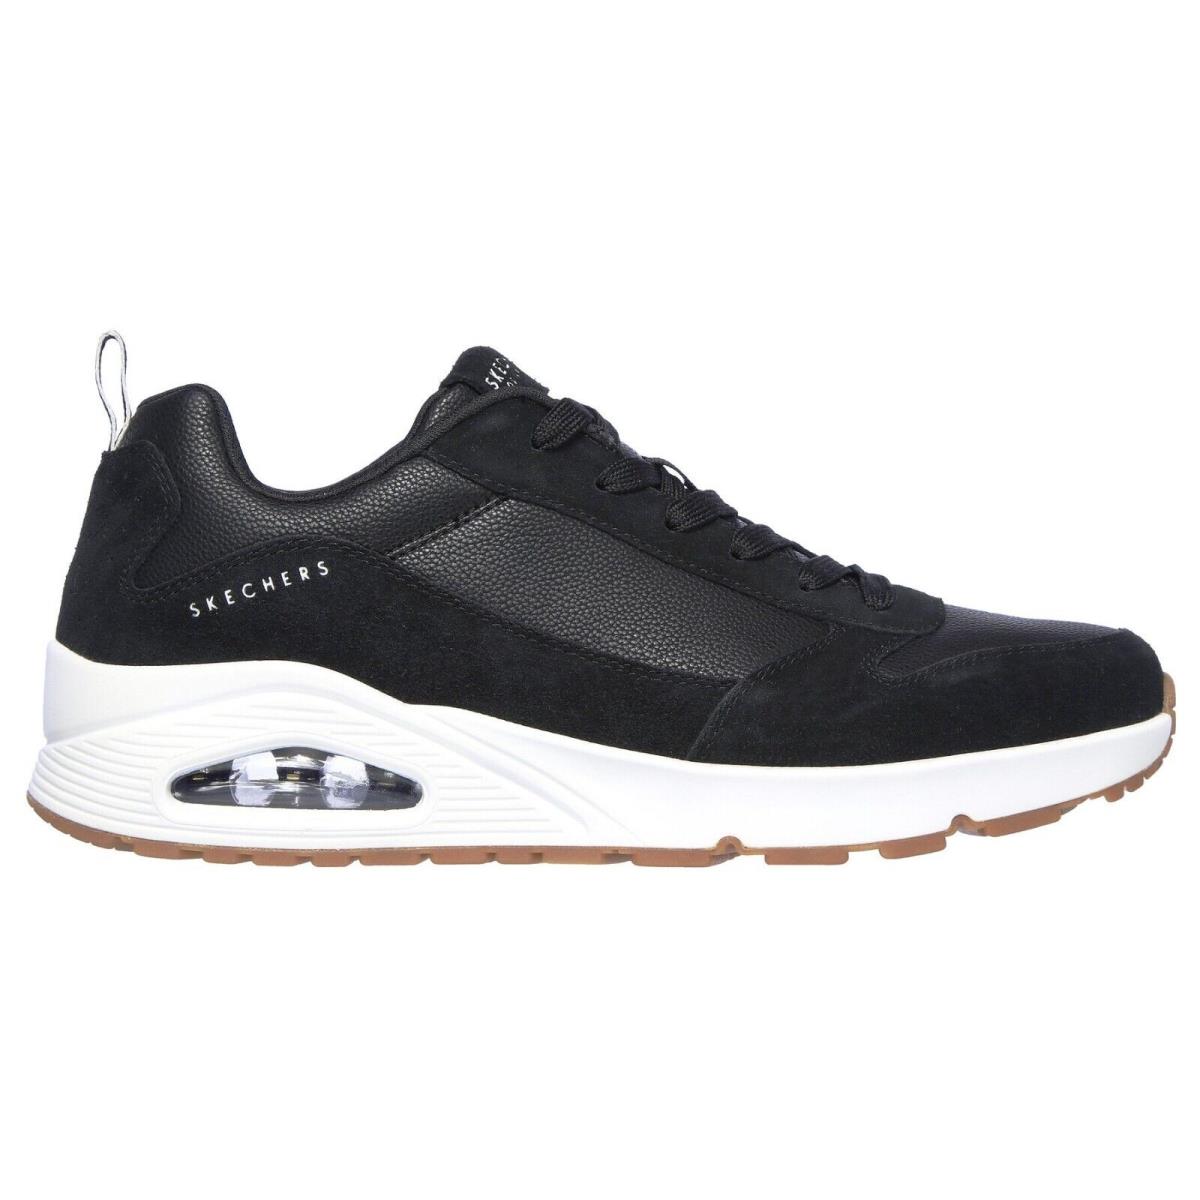 Skechers shoes Uno Stacre - Black/White 13